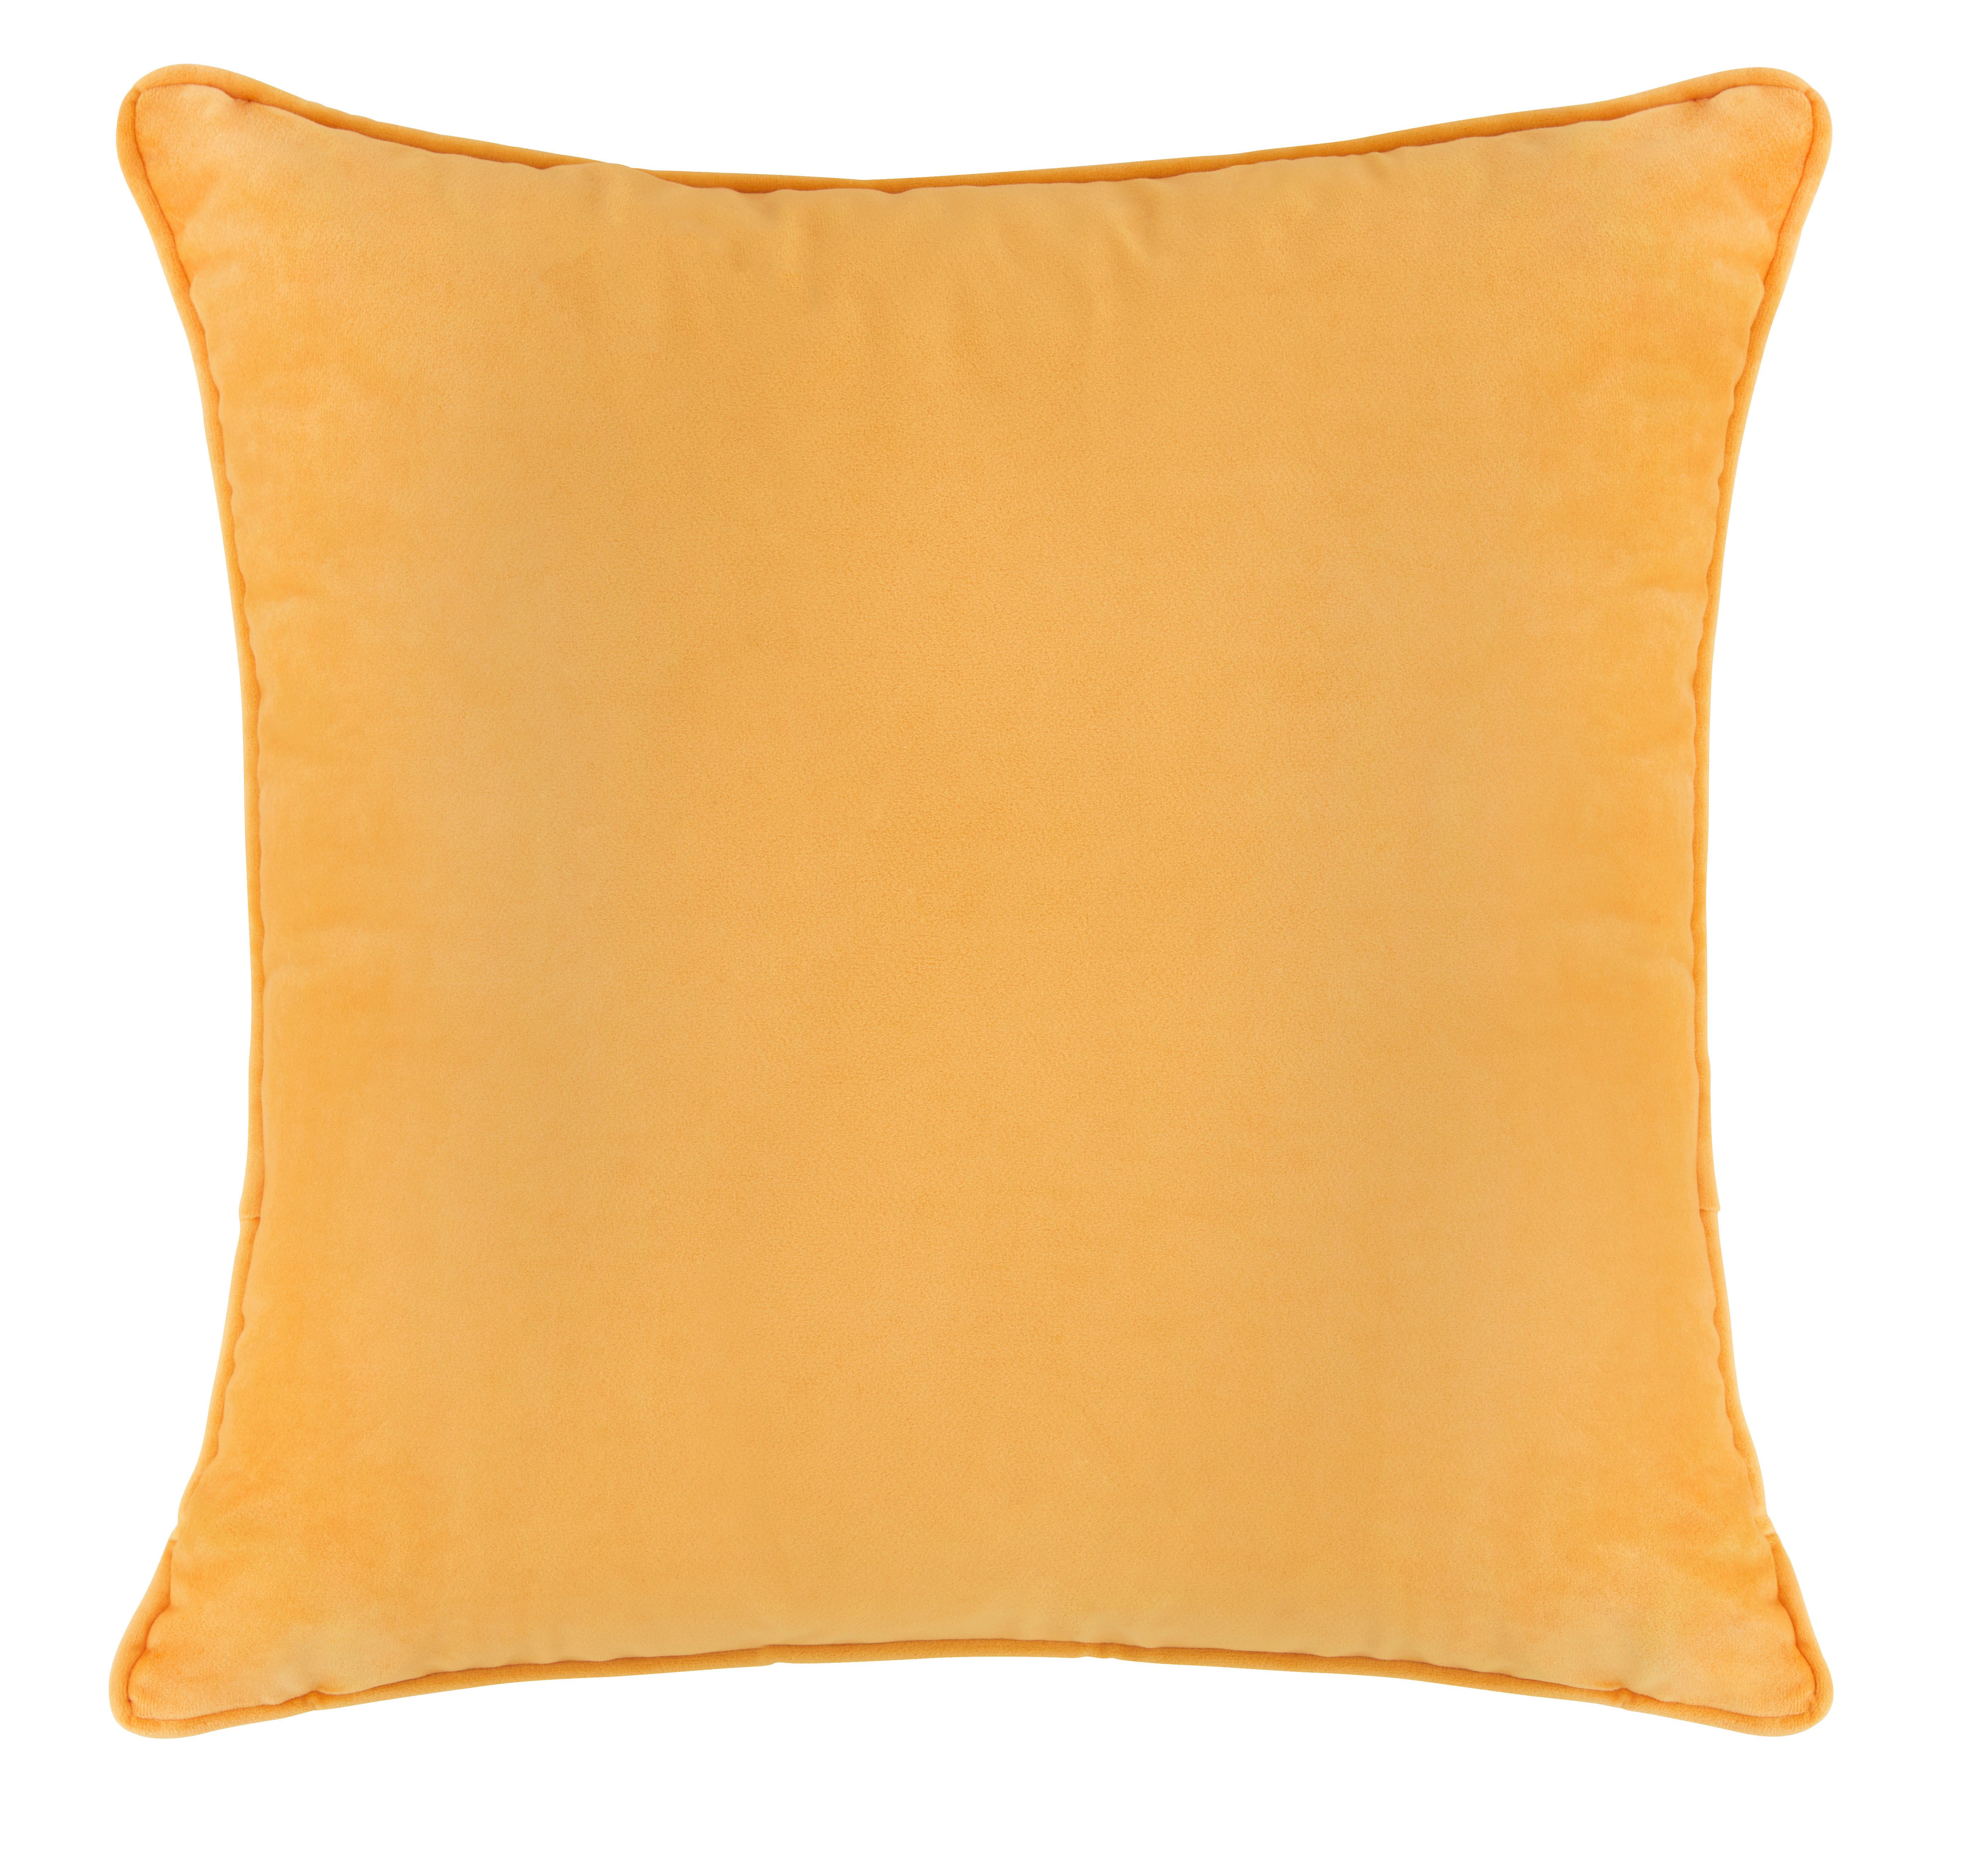 Dekorační Polštář Viola, 45/45cm, Žlutá - žlutá, Konvenční, textil (45/45cm) - Premium Living